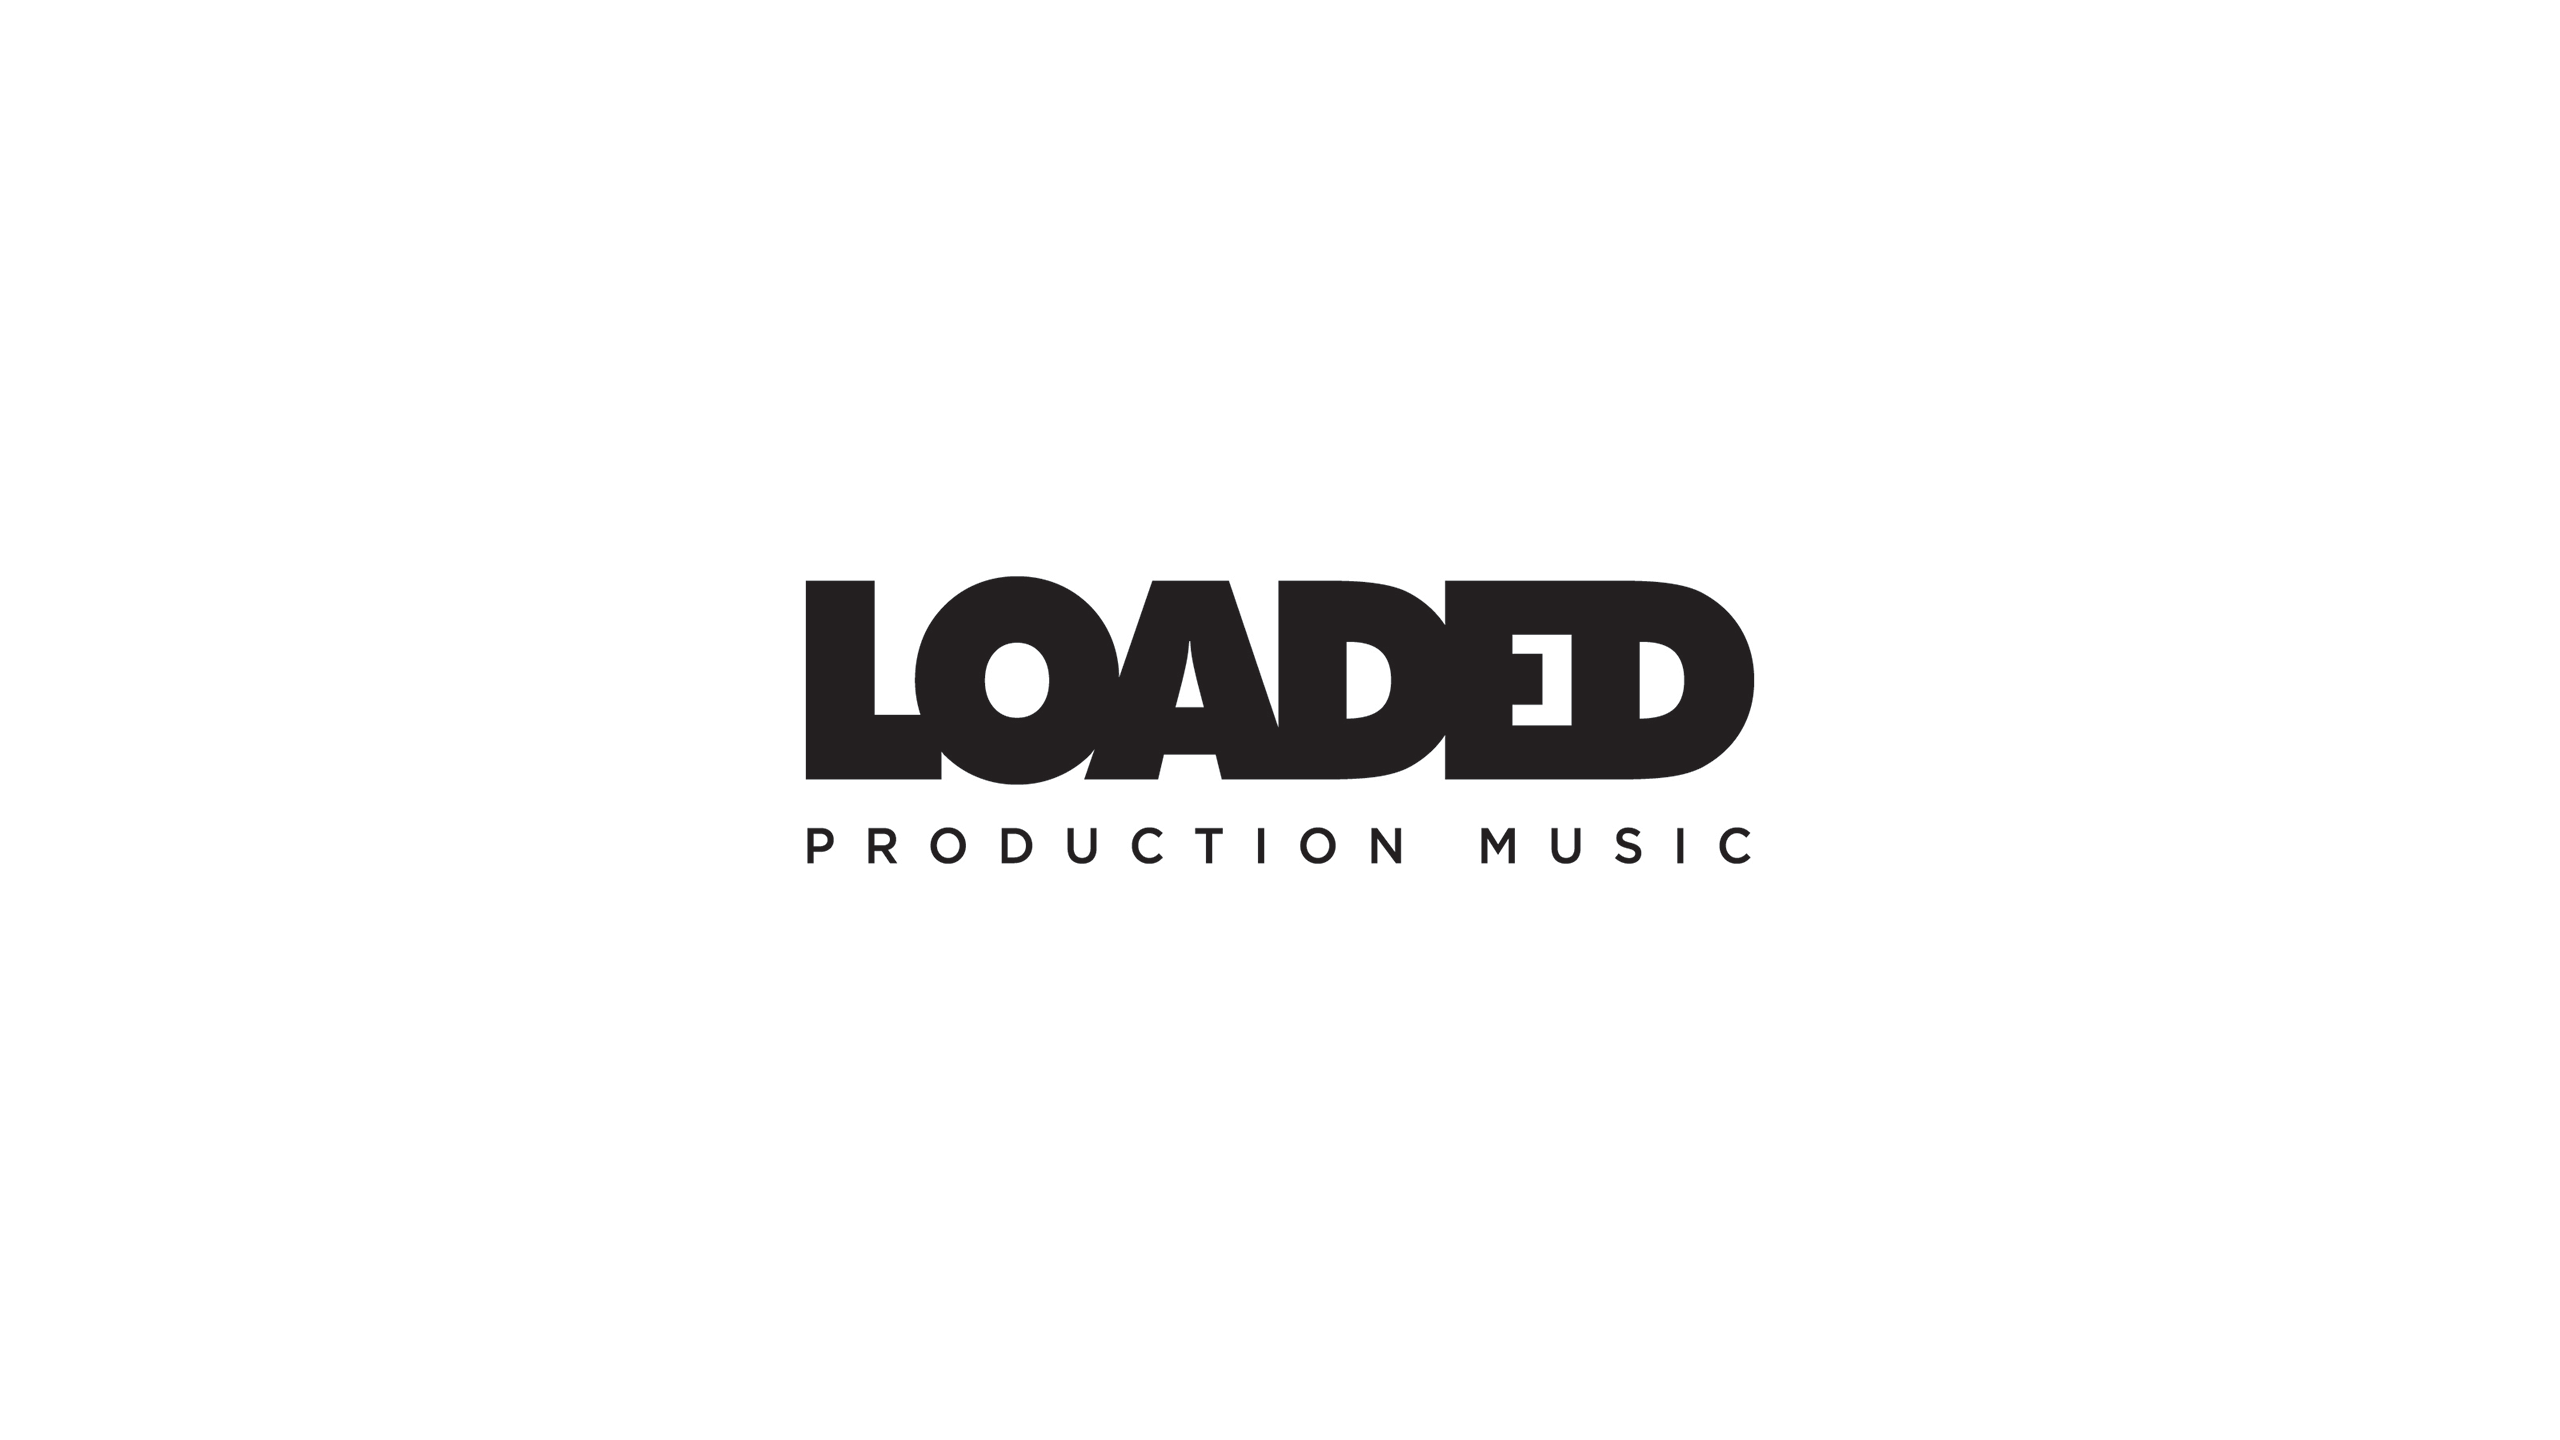 Production Logo - Loaded Production Music